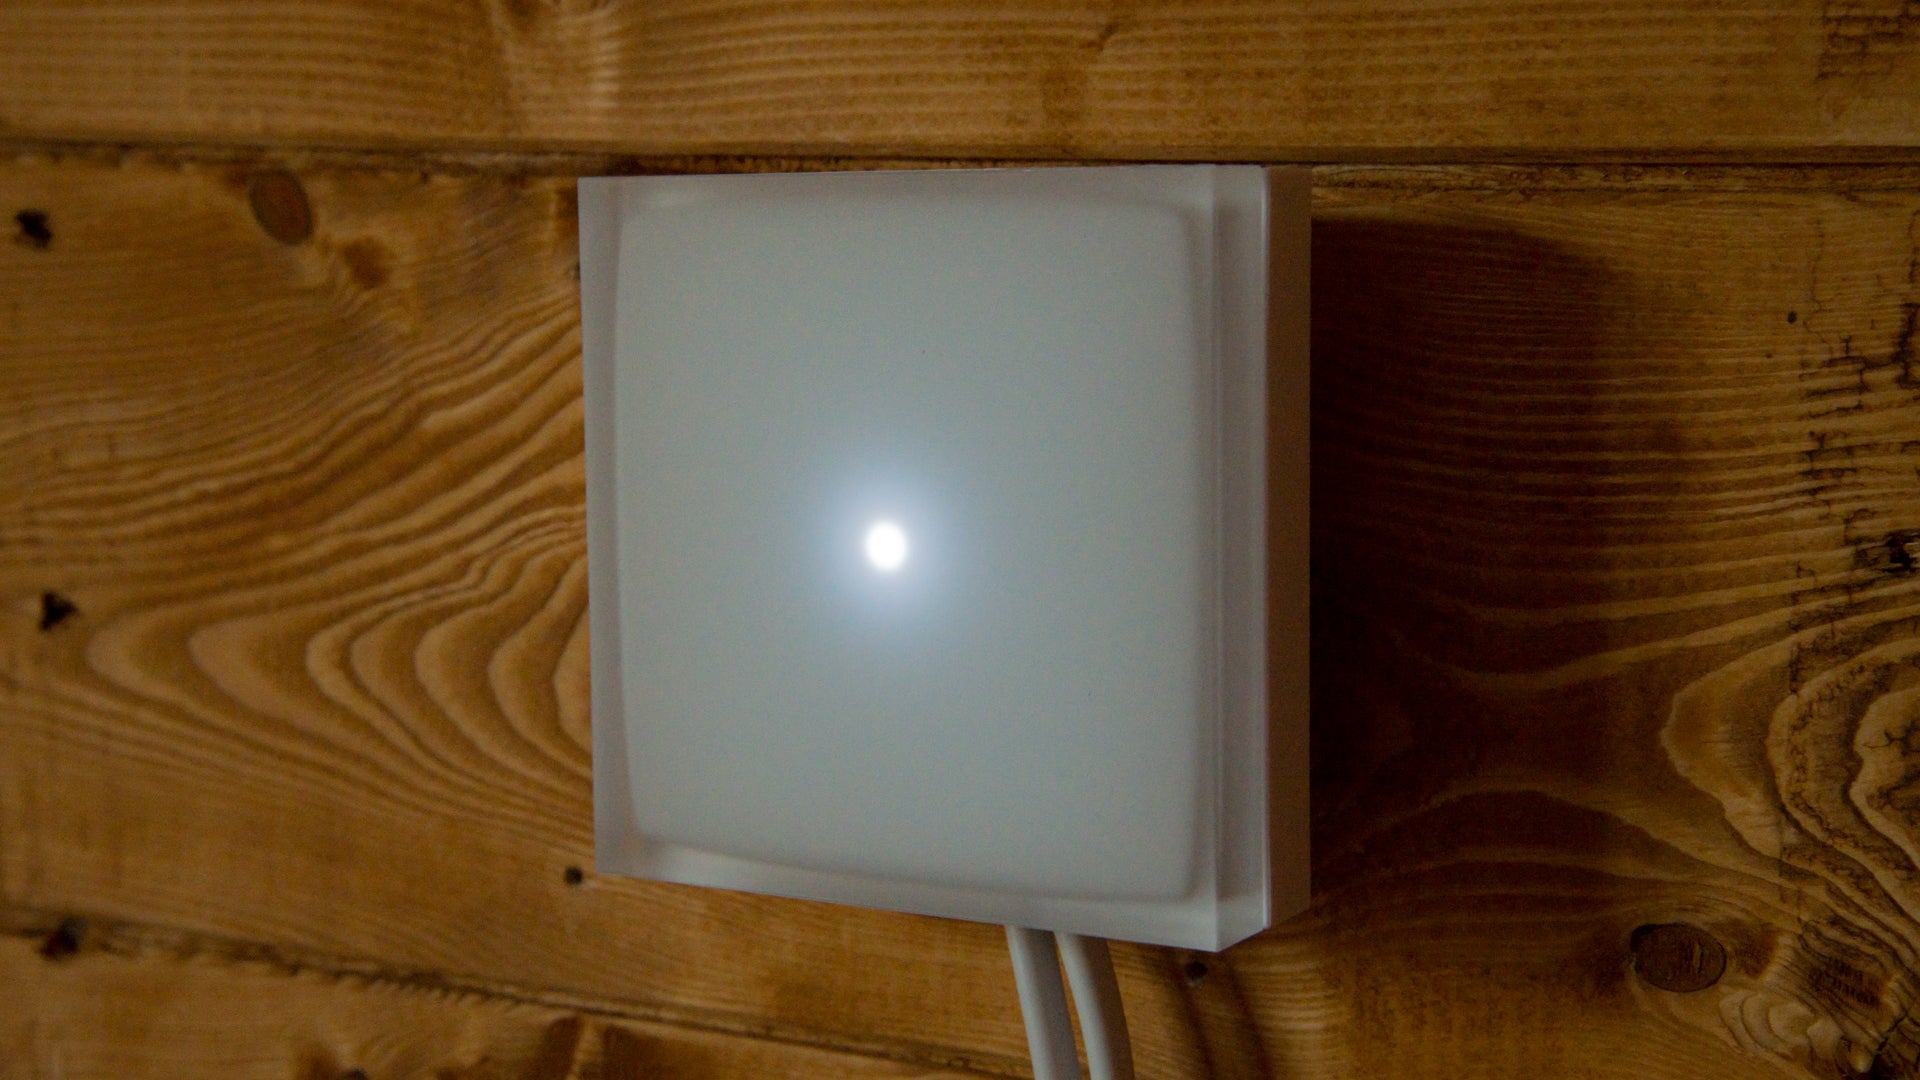 Netatmo Smart Thermostat mounted on wooden wall.